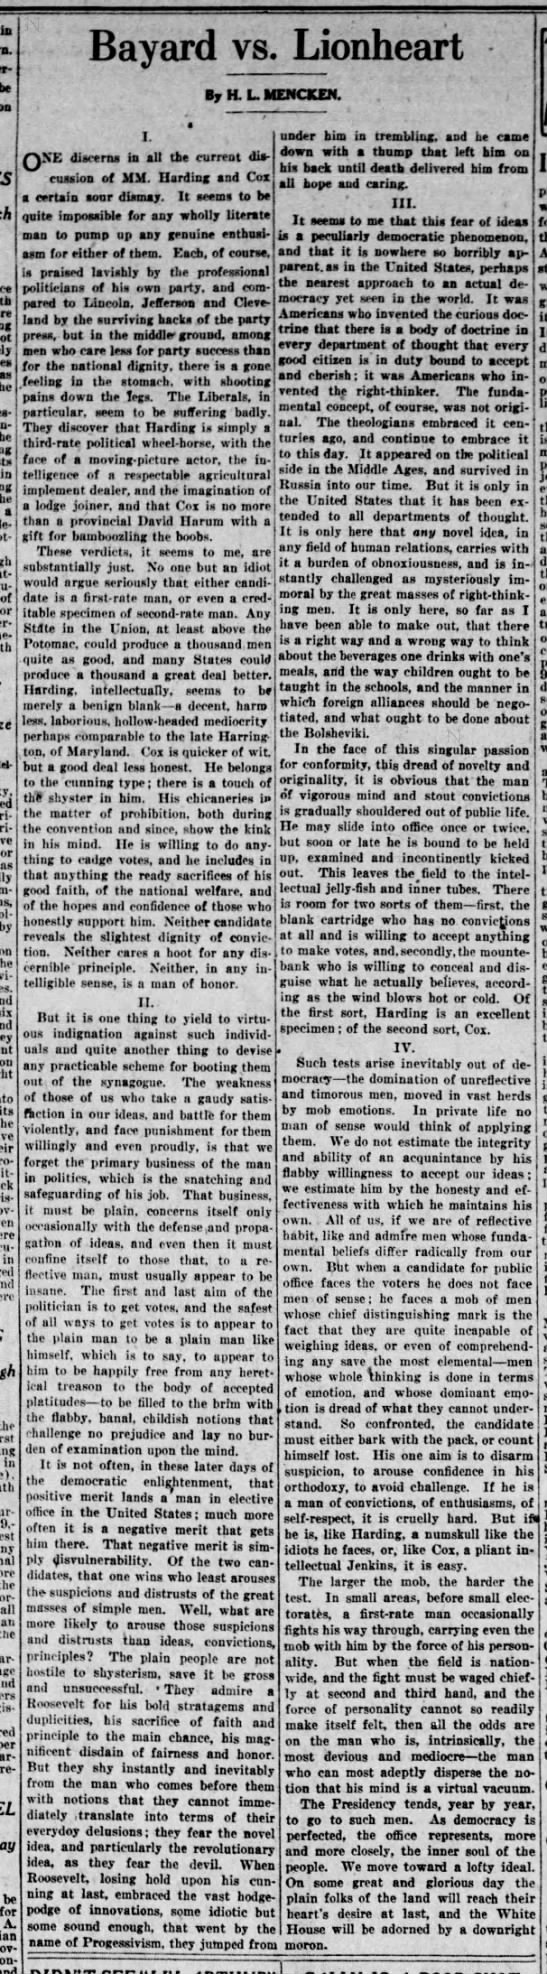 H.L. Mencken article, 26 Jul 1920, The Evening Sun (Baltimore, Maryland), "Bayard vs. Lionheart" - 